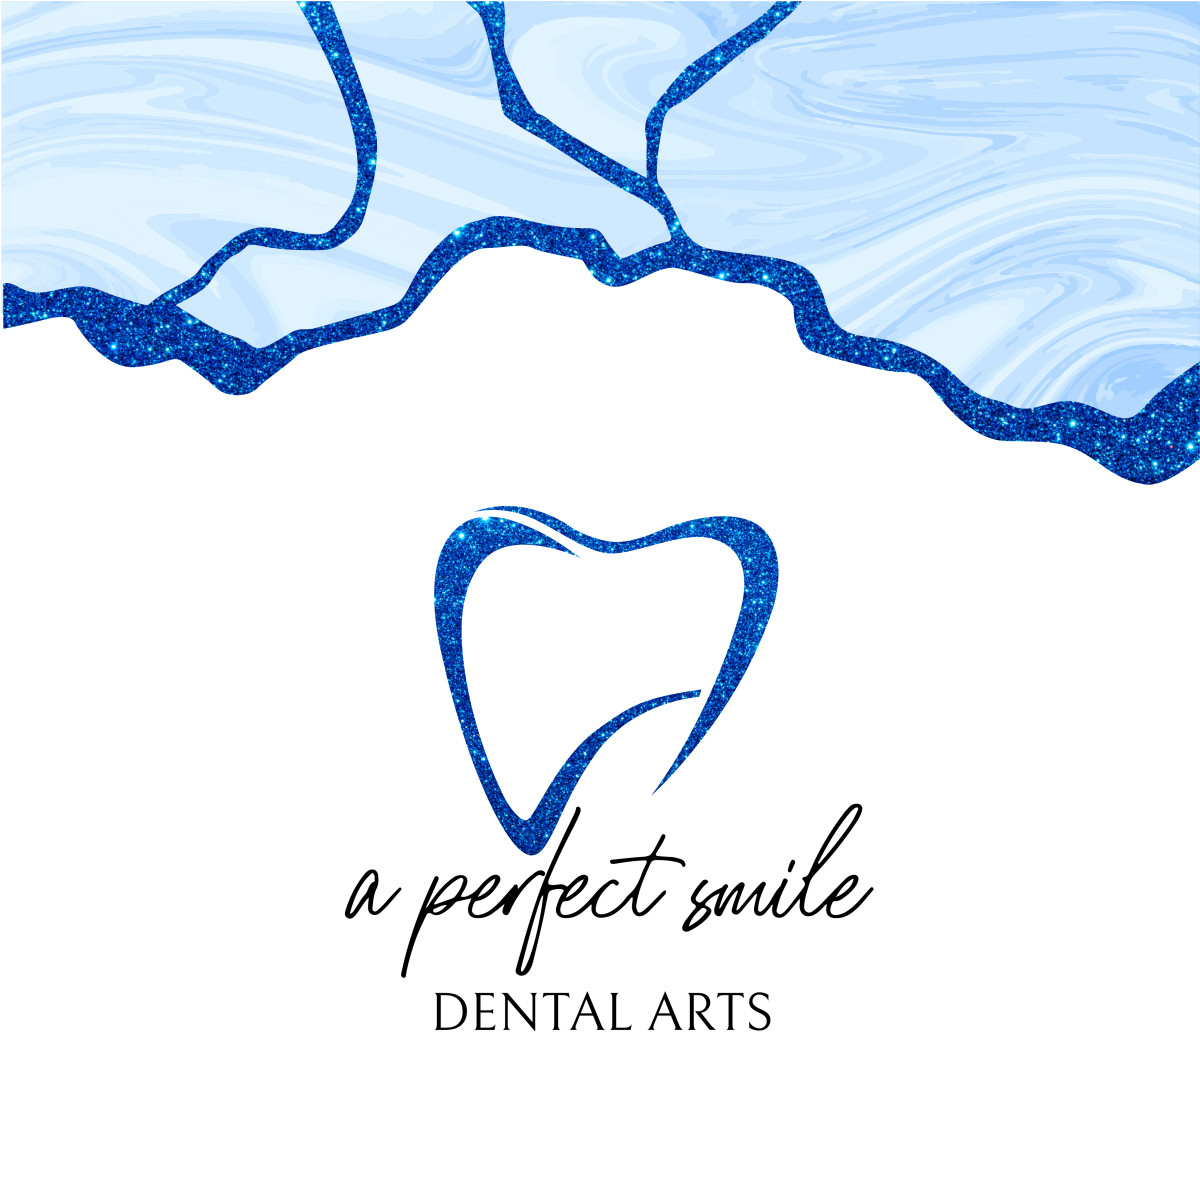 A Perfect Smile Dental Arts